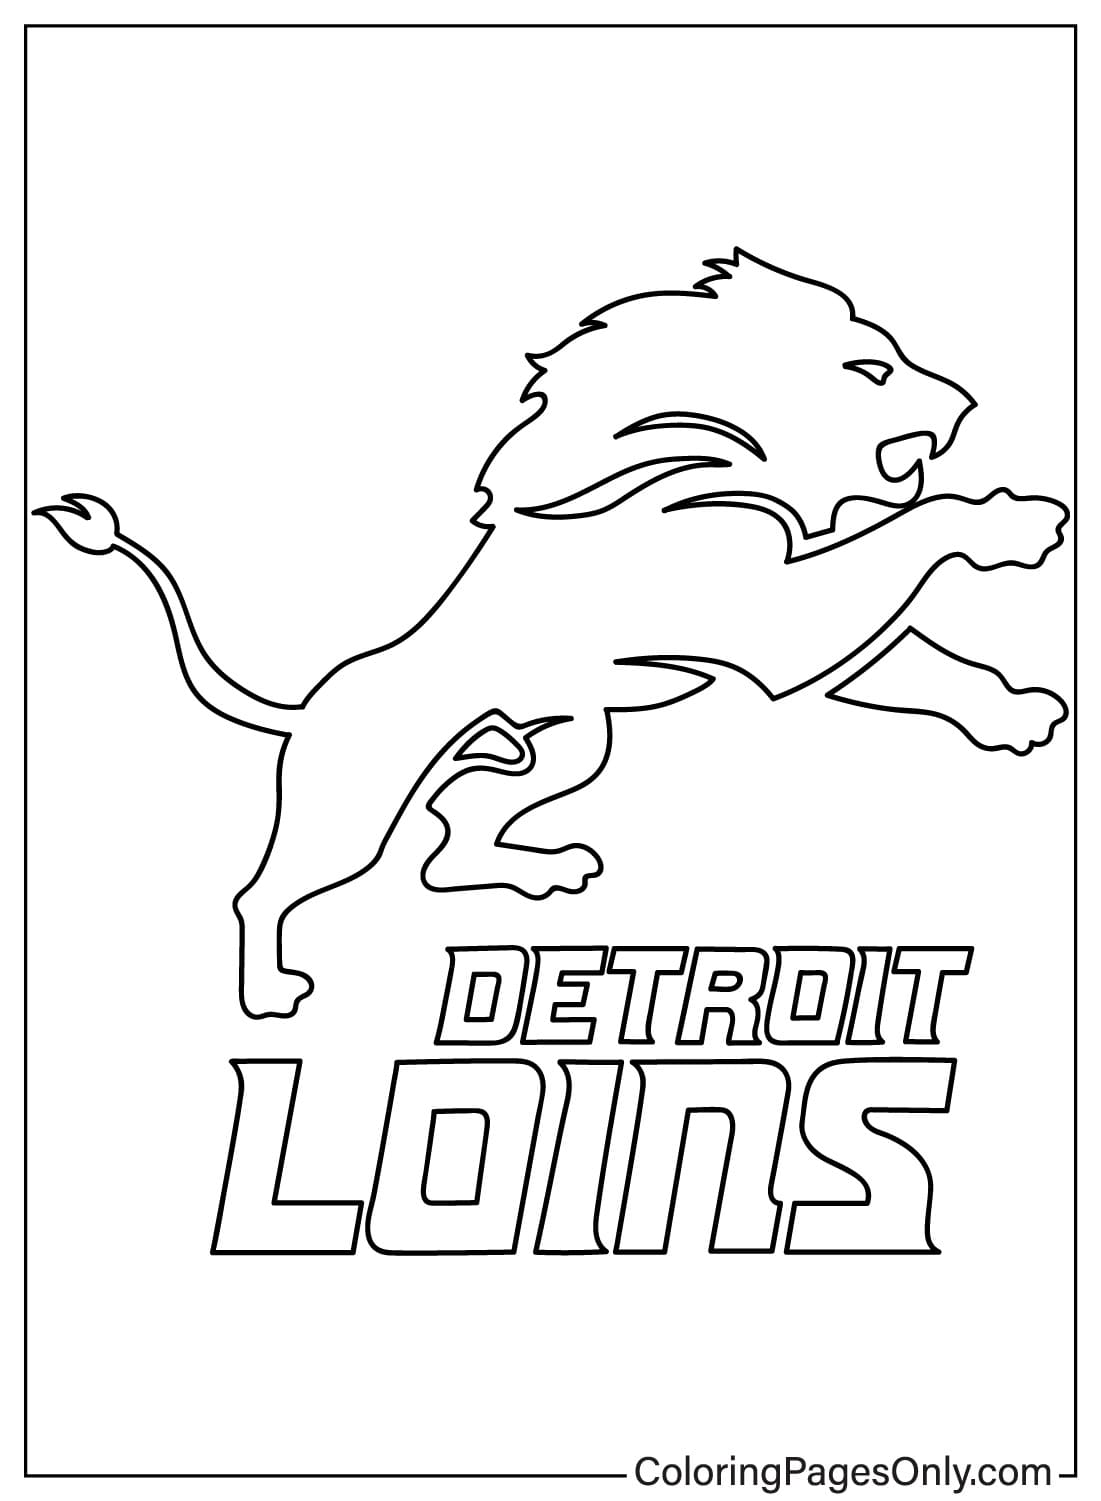 Detroit Lions kleurplaat van Detroit Lions